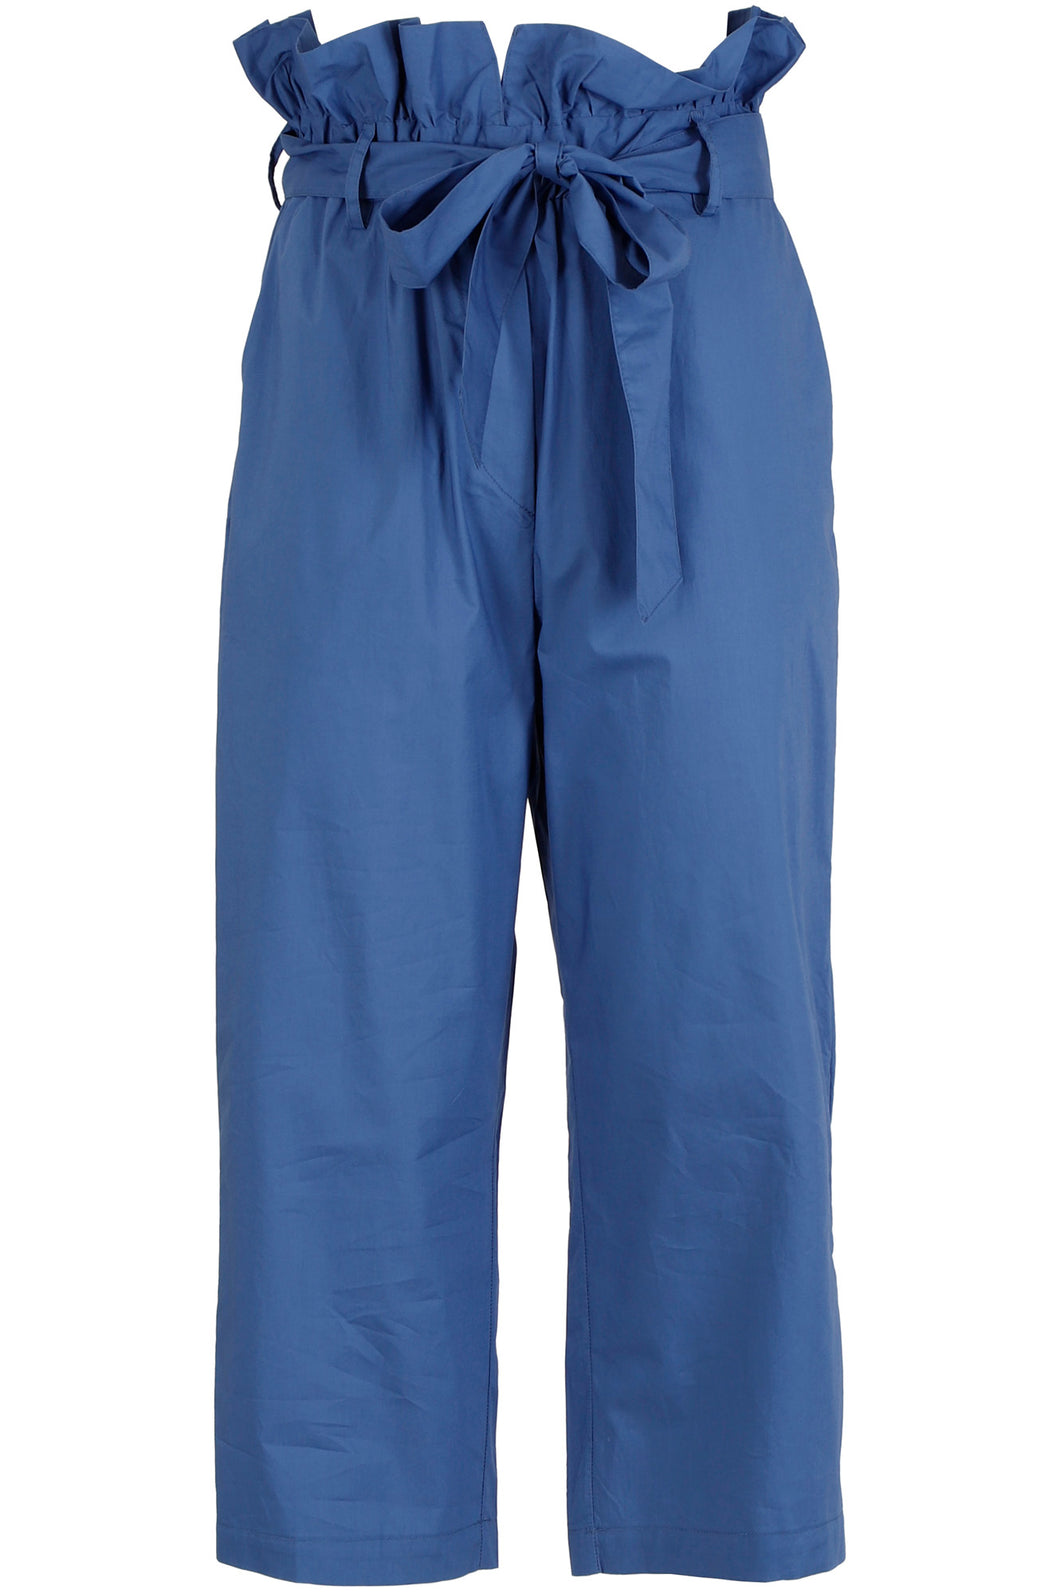 Pantaloni Donna colore Blu